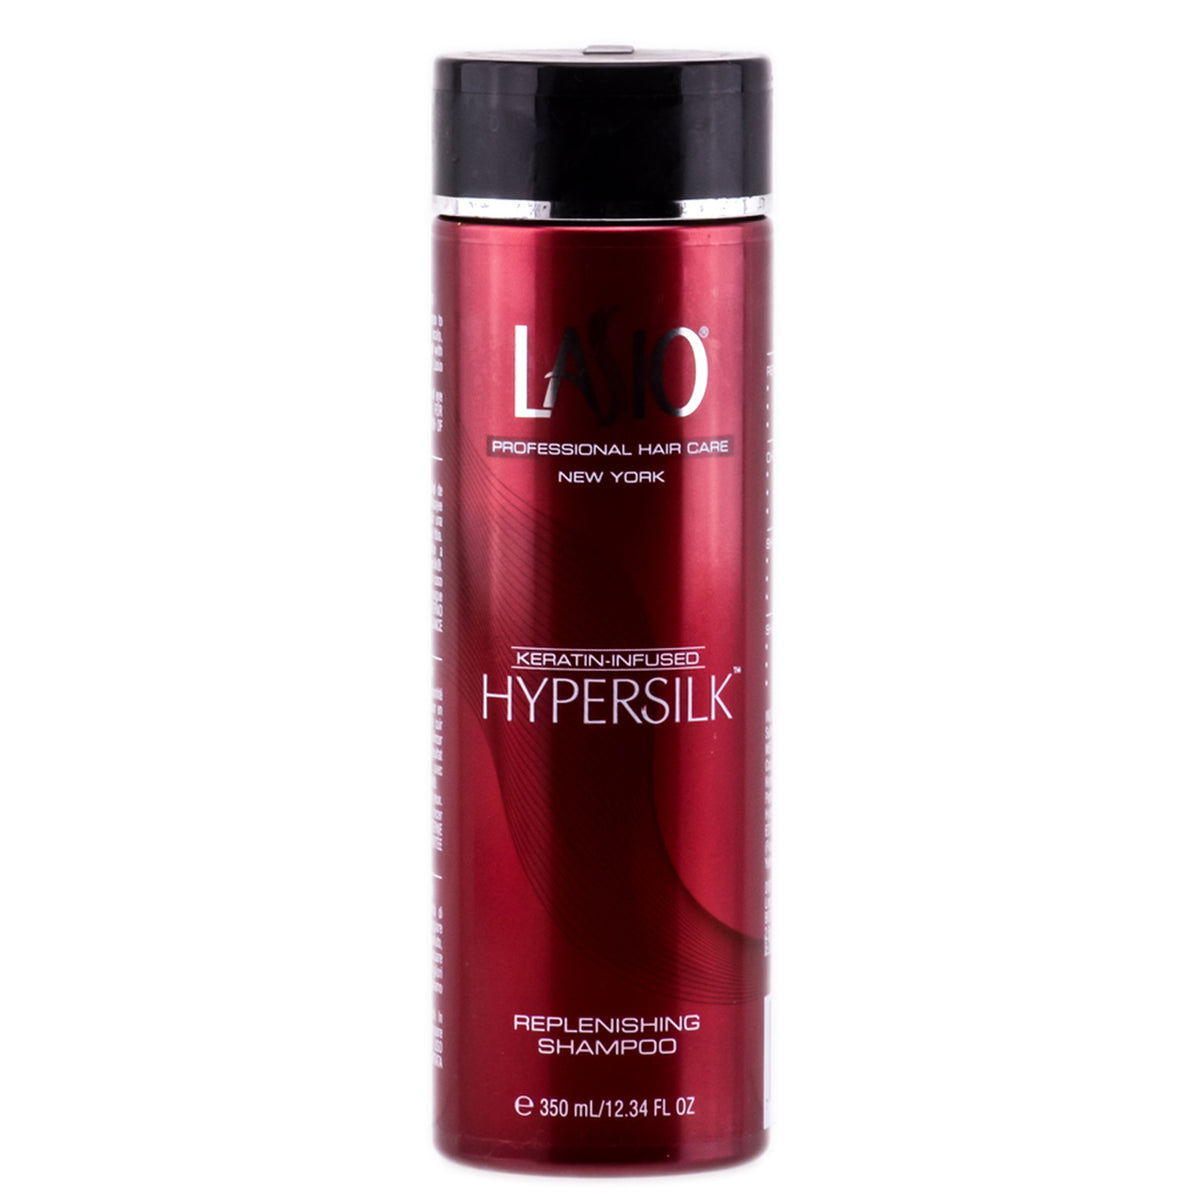 Lasio Hypersilk Replenishing Shampoo 350ml